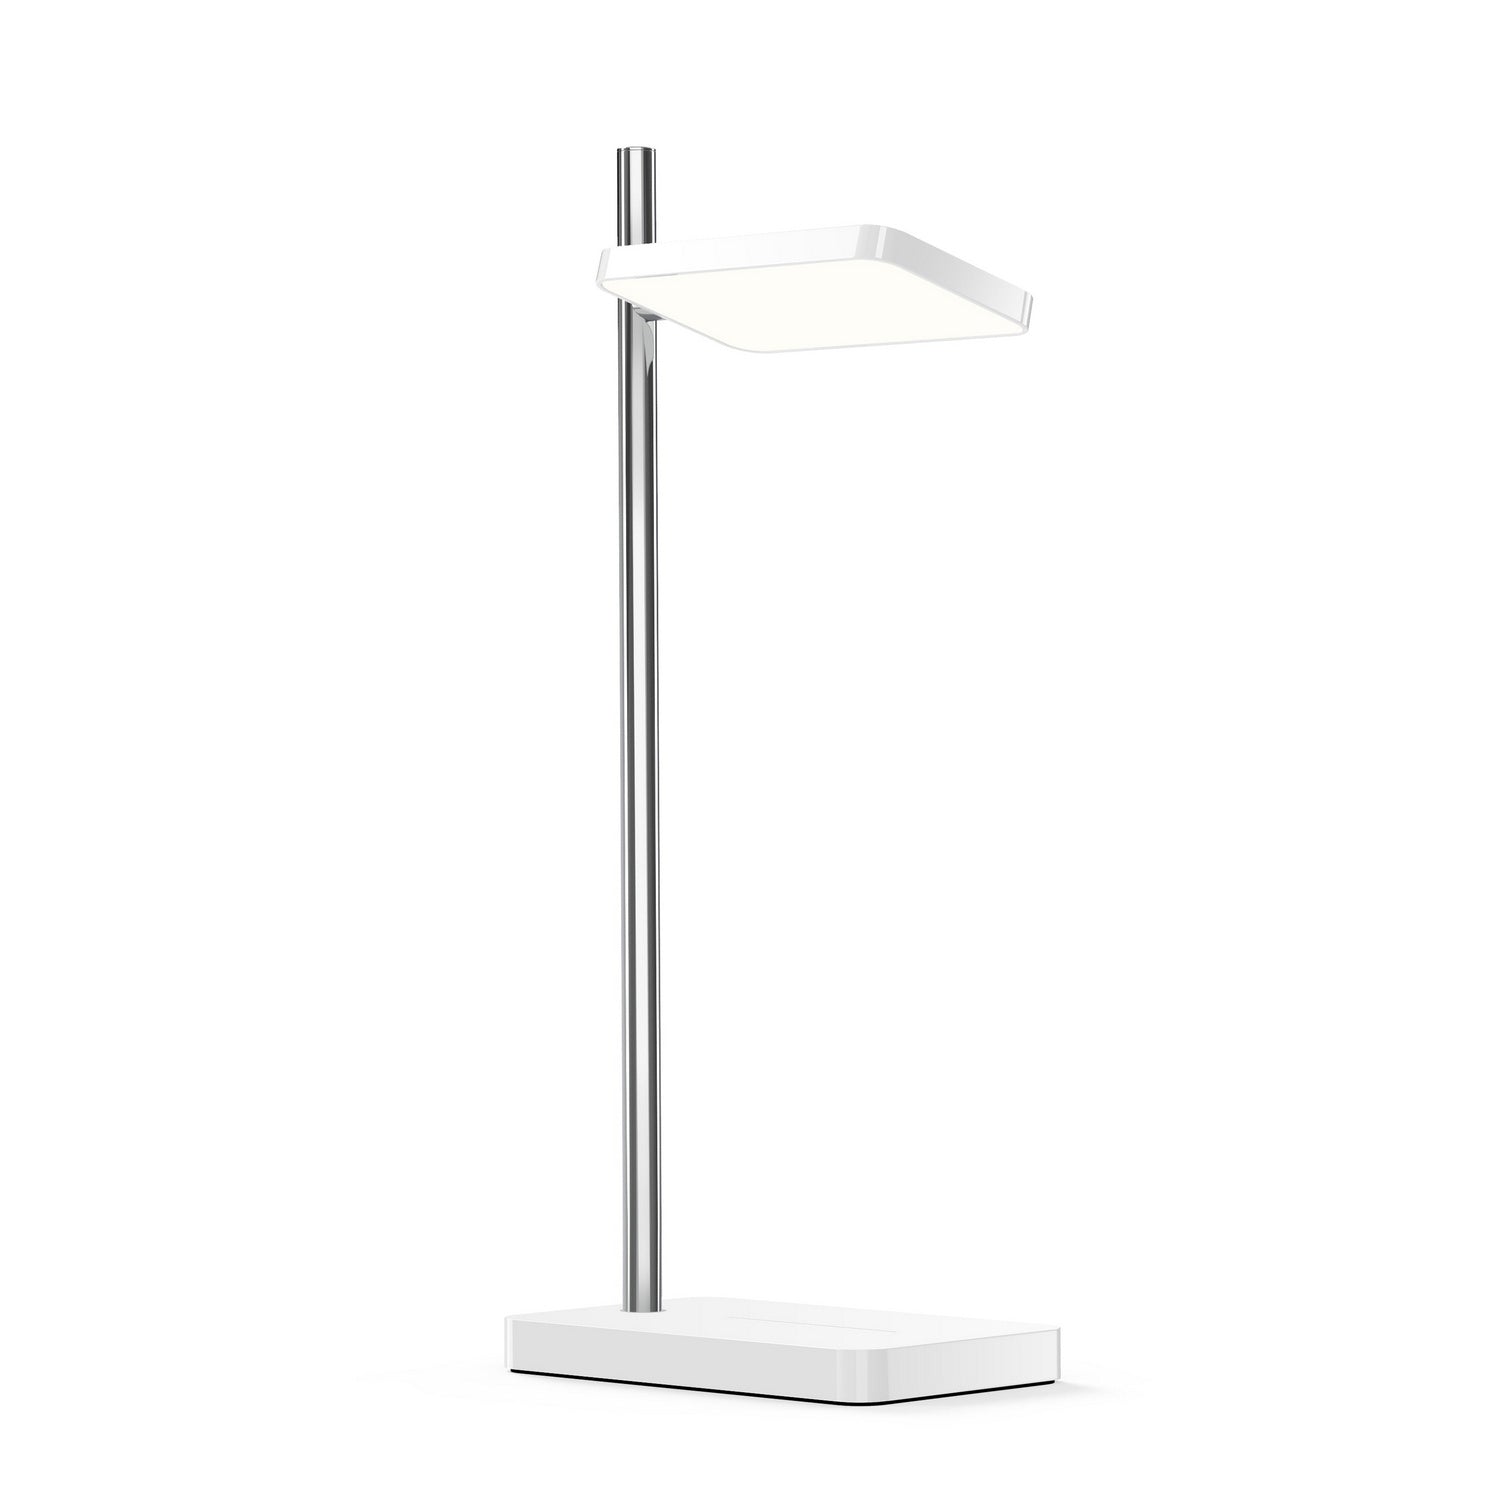 Pablo Designs - LED Table Lamp - Talia - White/Silver- Union Lighting Luminaires Decor